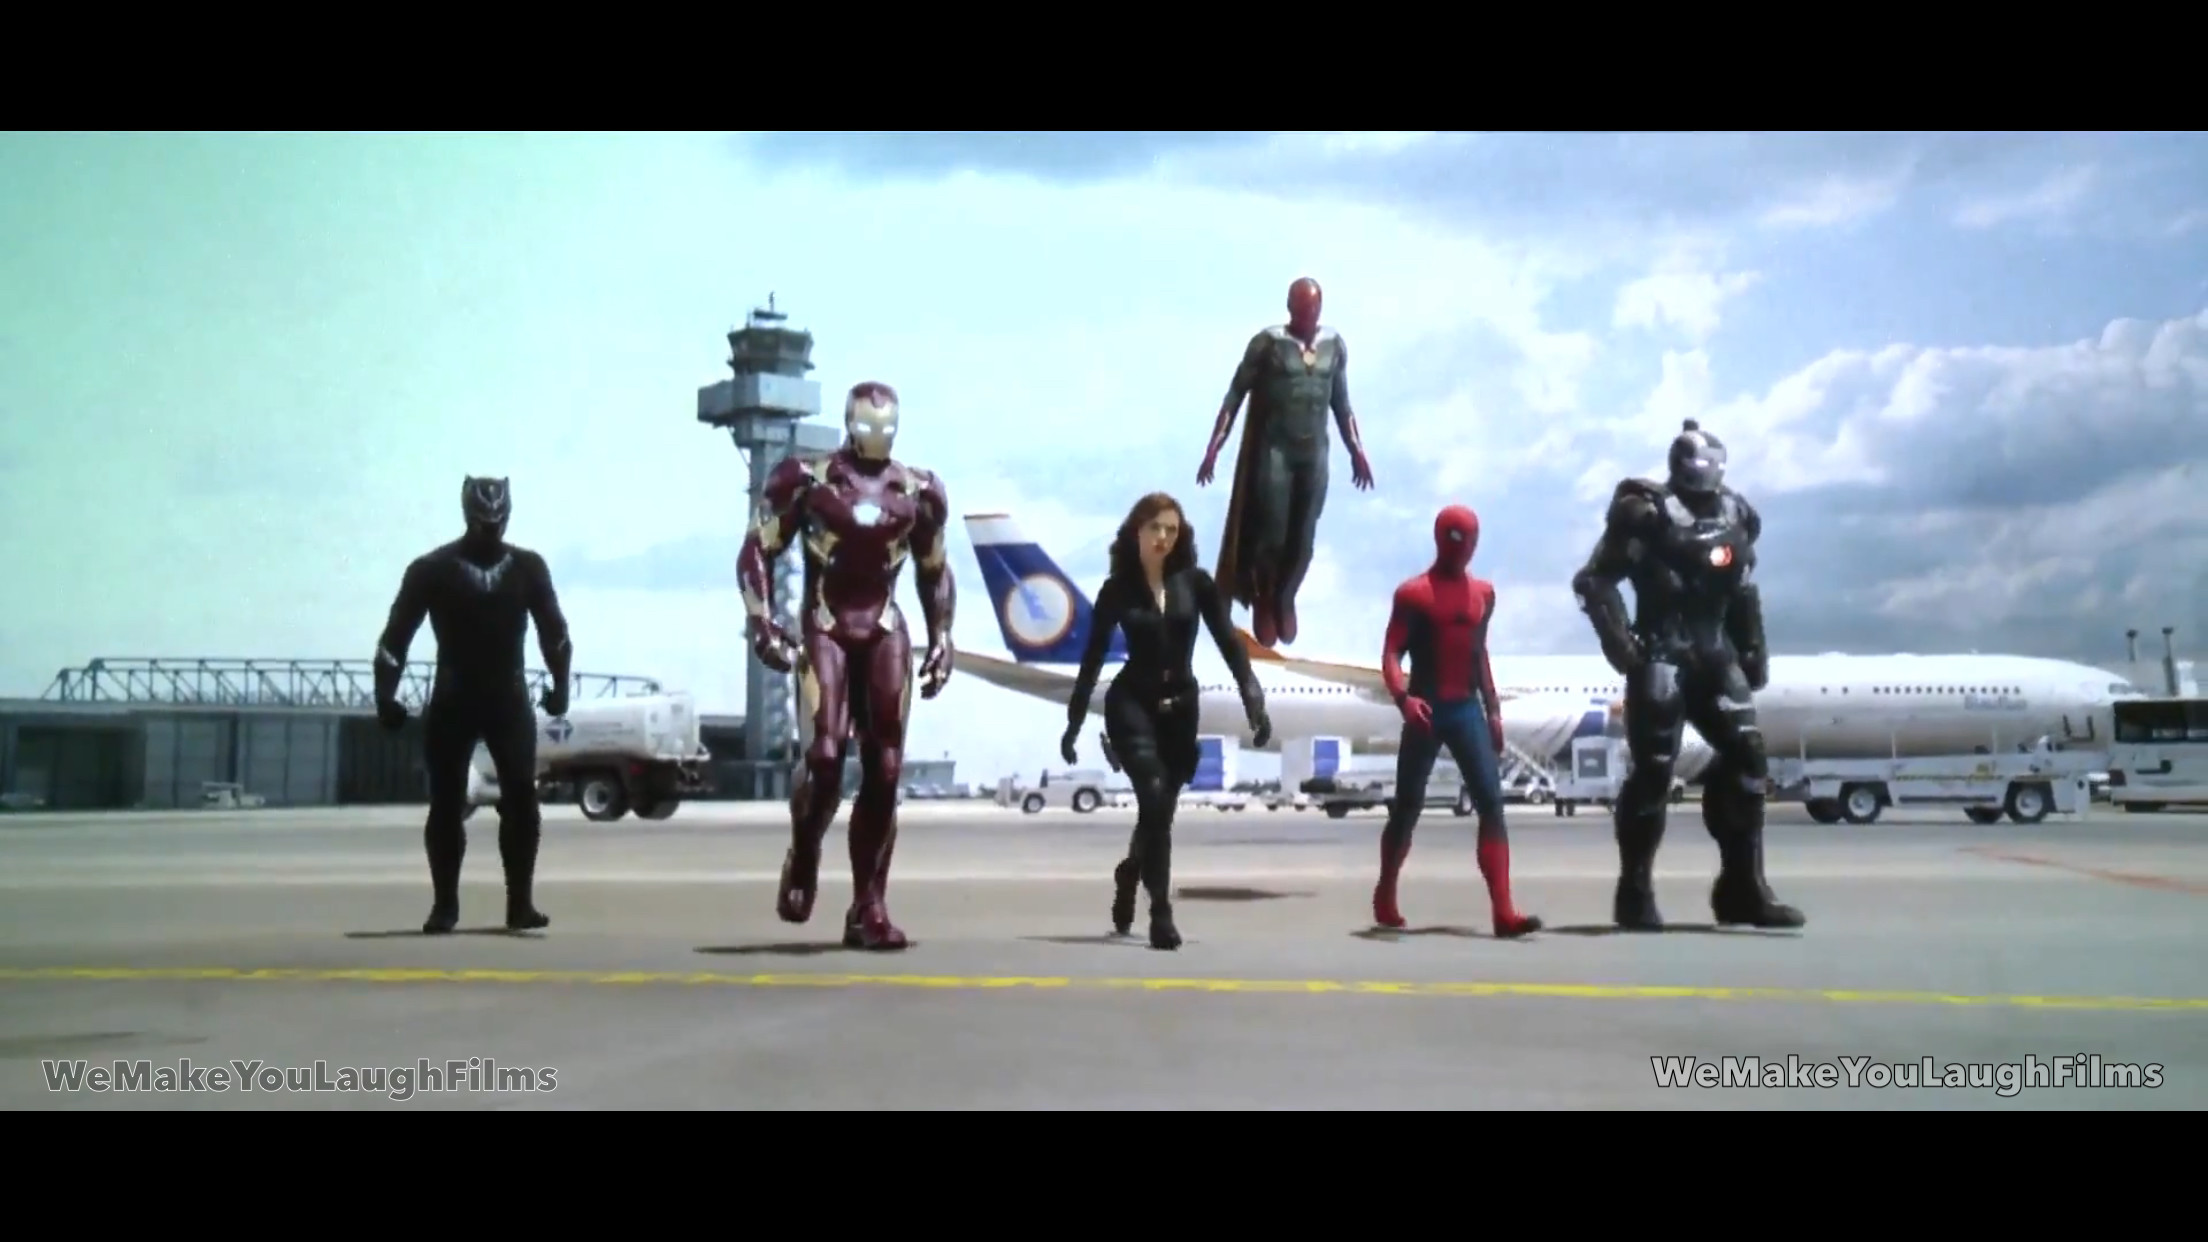 Wemakeyoulaughfilms Team Iron Man Walking – Captain America Civil War by wemakeyoulaughfilms